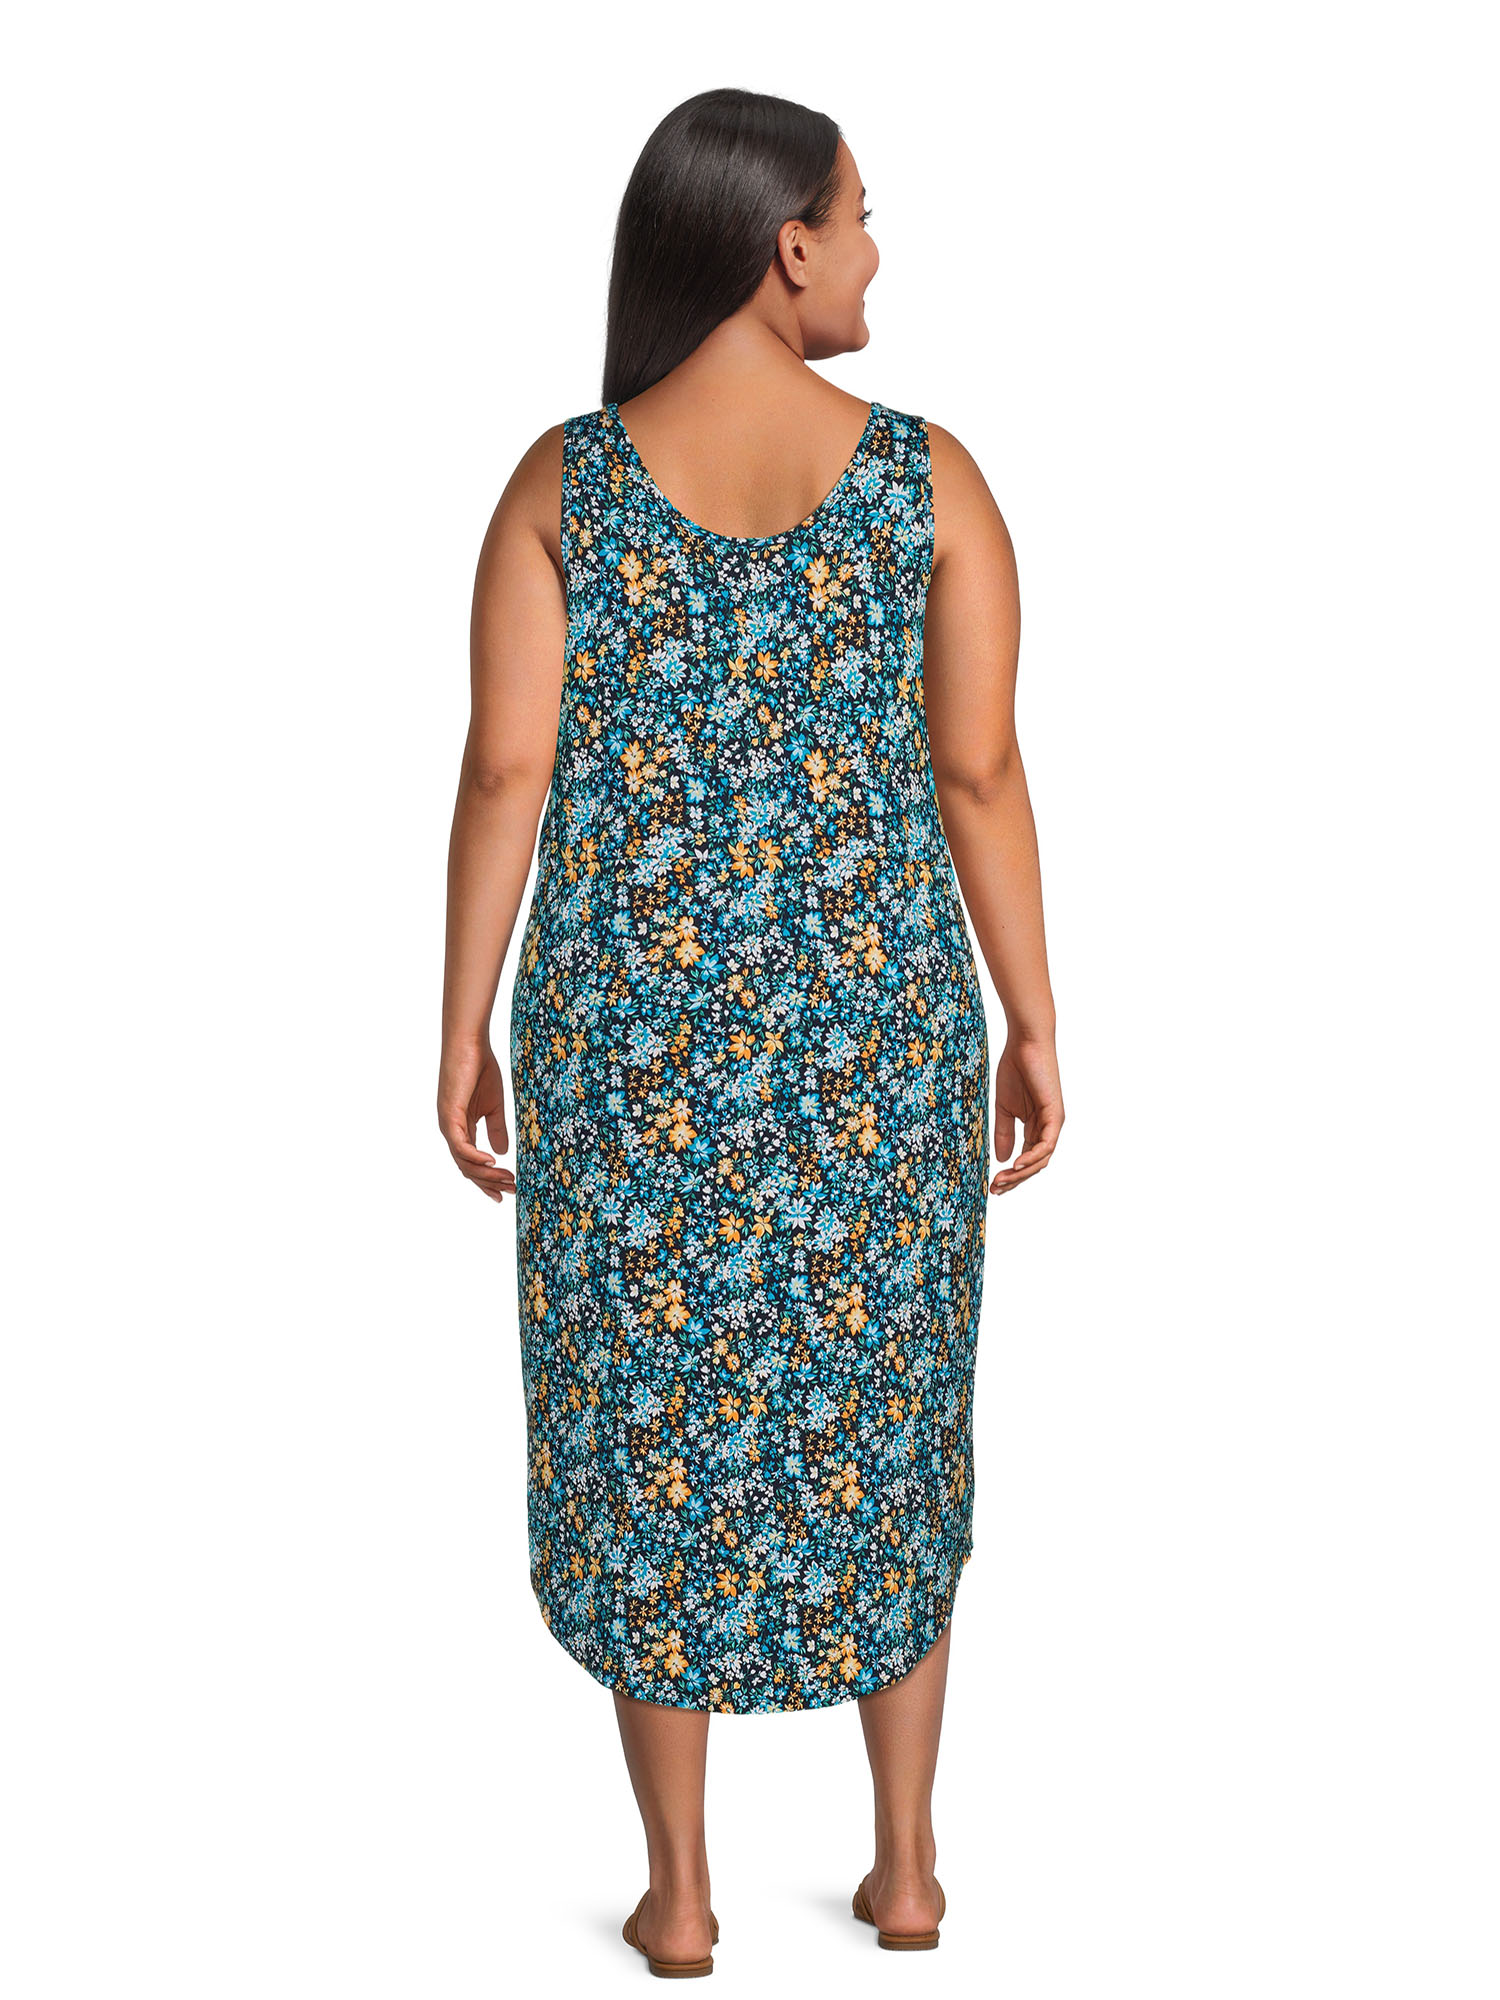 Terra & Sky Women's Plus Size Drawstring Waist Tank Dress - image 3 of 5